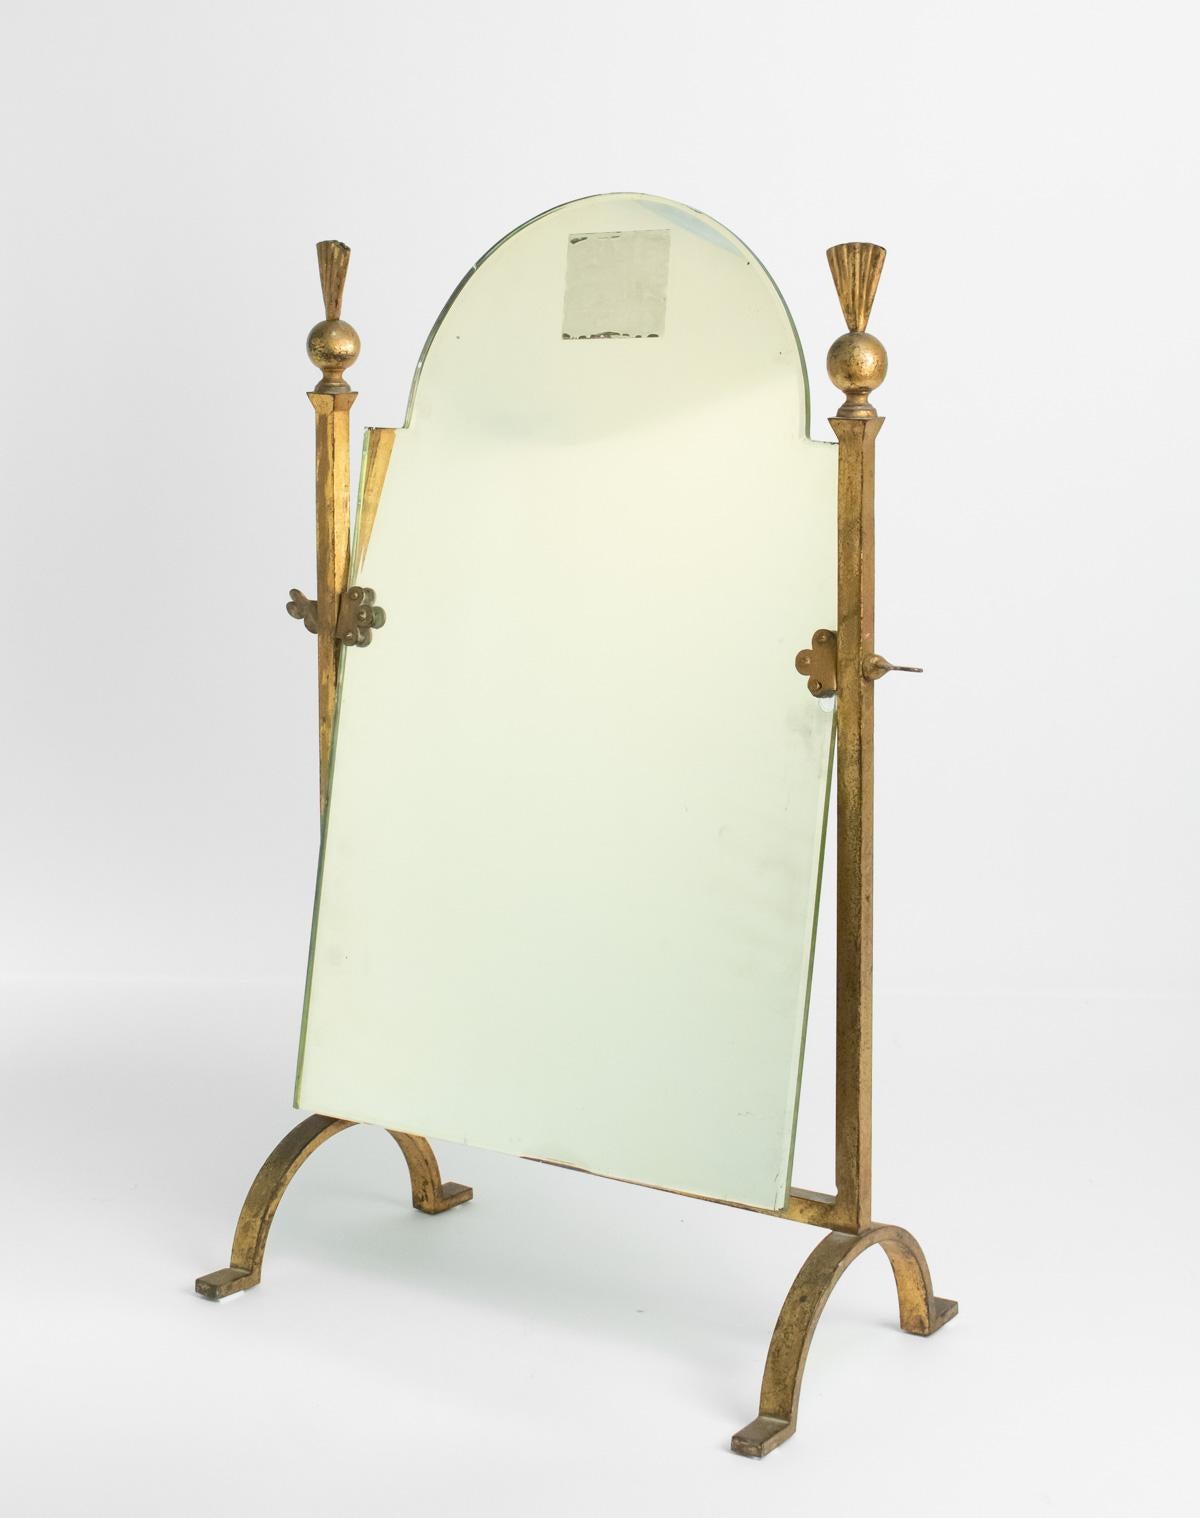 Golden wrought iron mirror, neoclassical 1960s, midcentury Art
Measures: H 63cm, W 41cm, W 22cm.